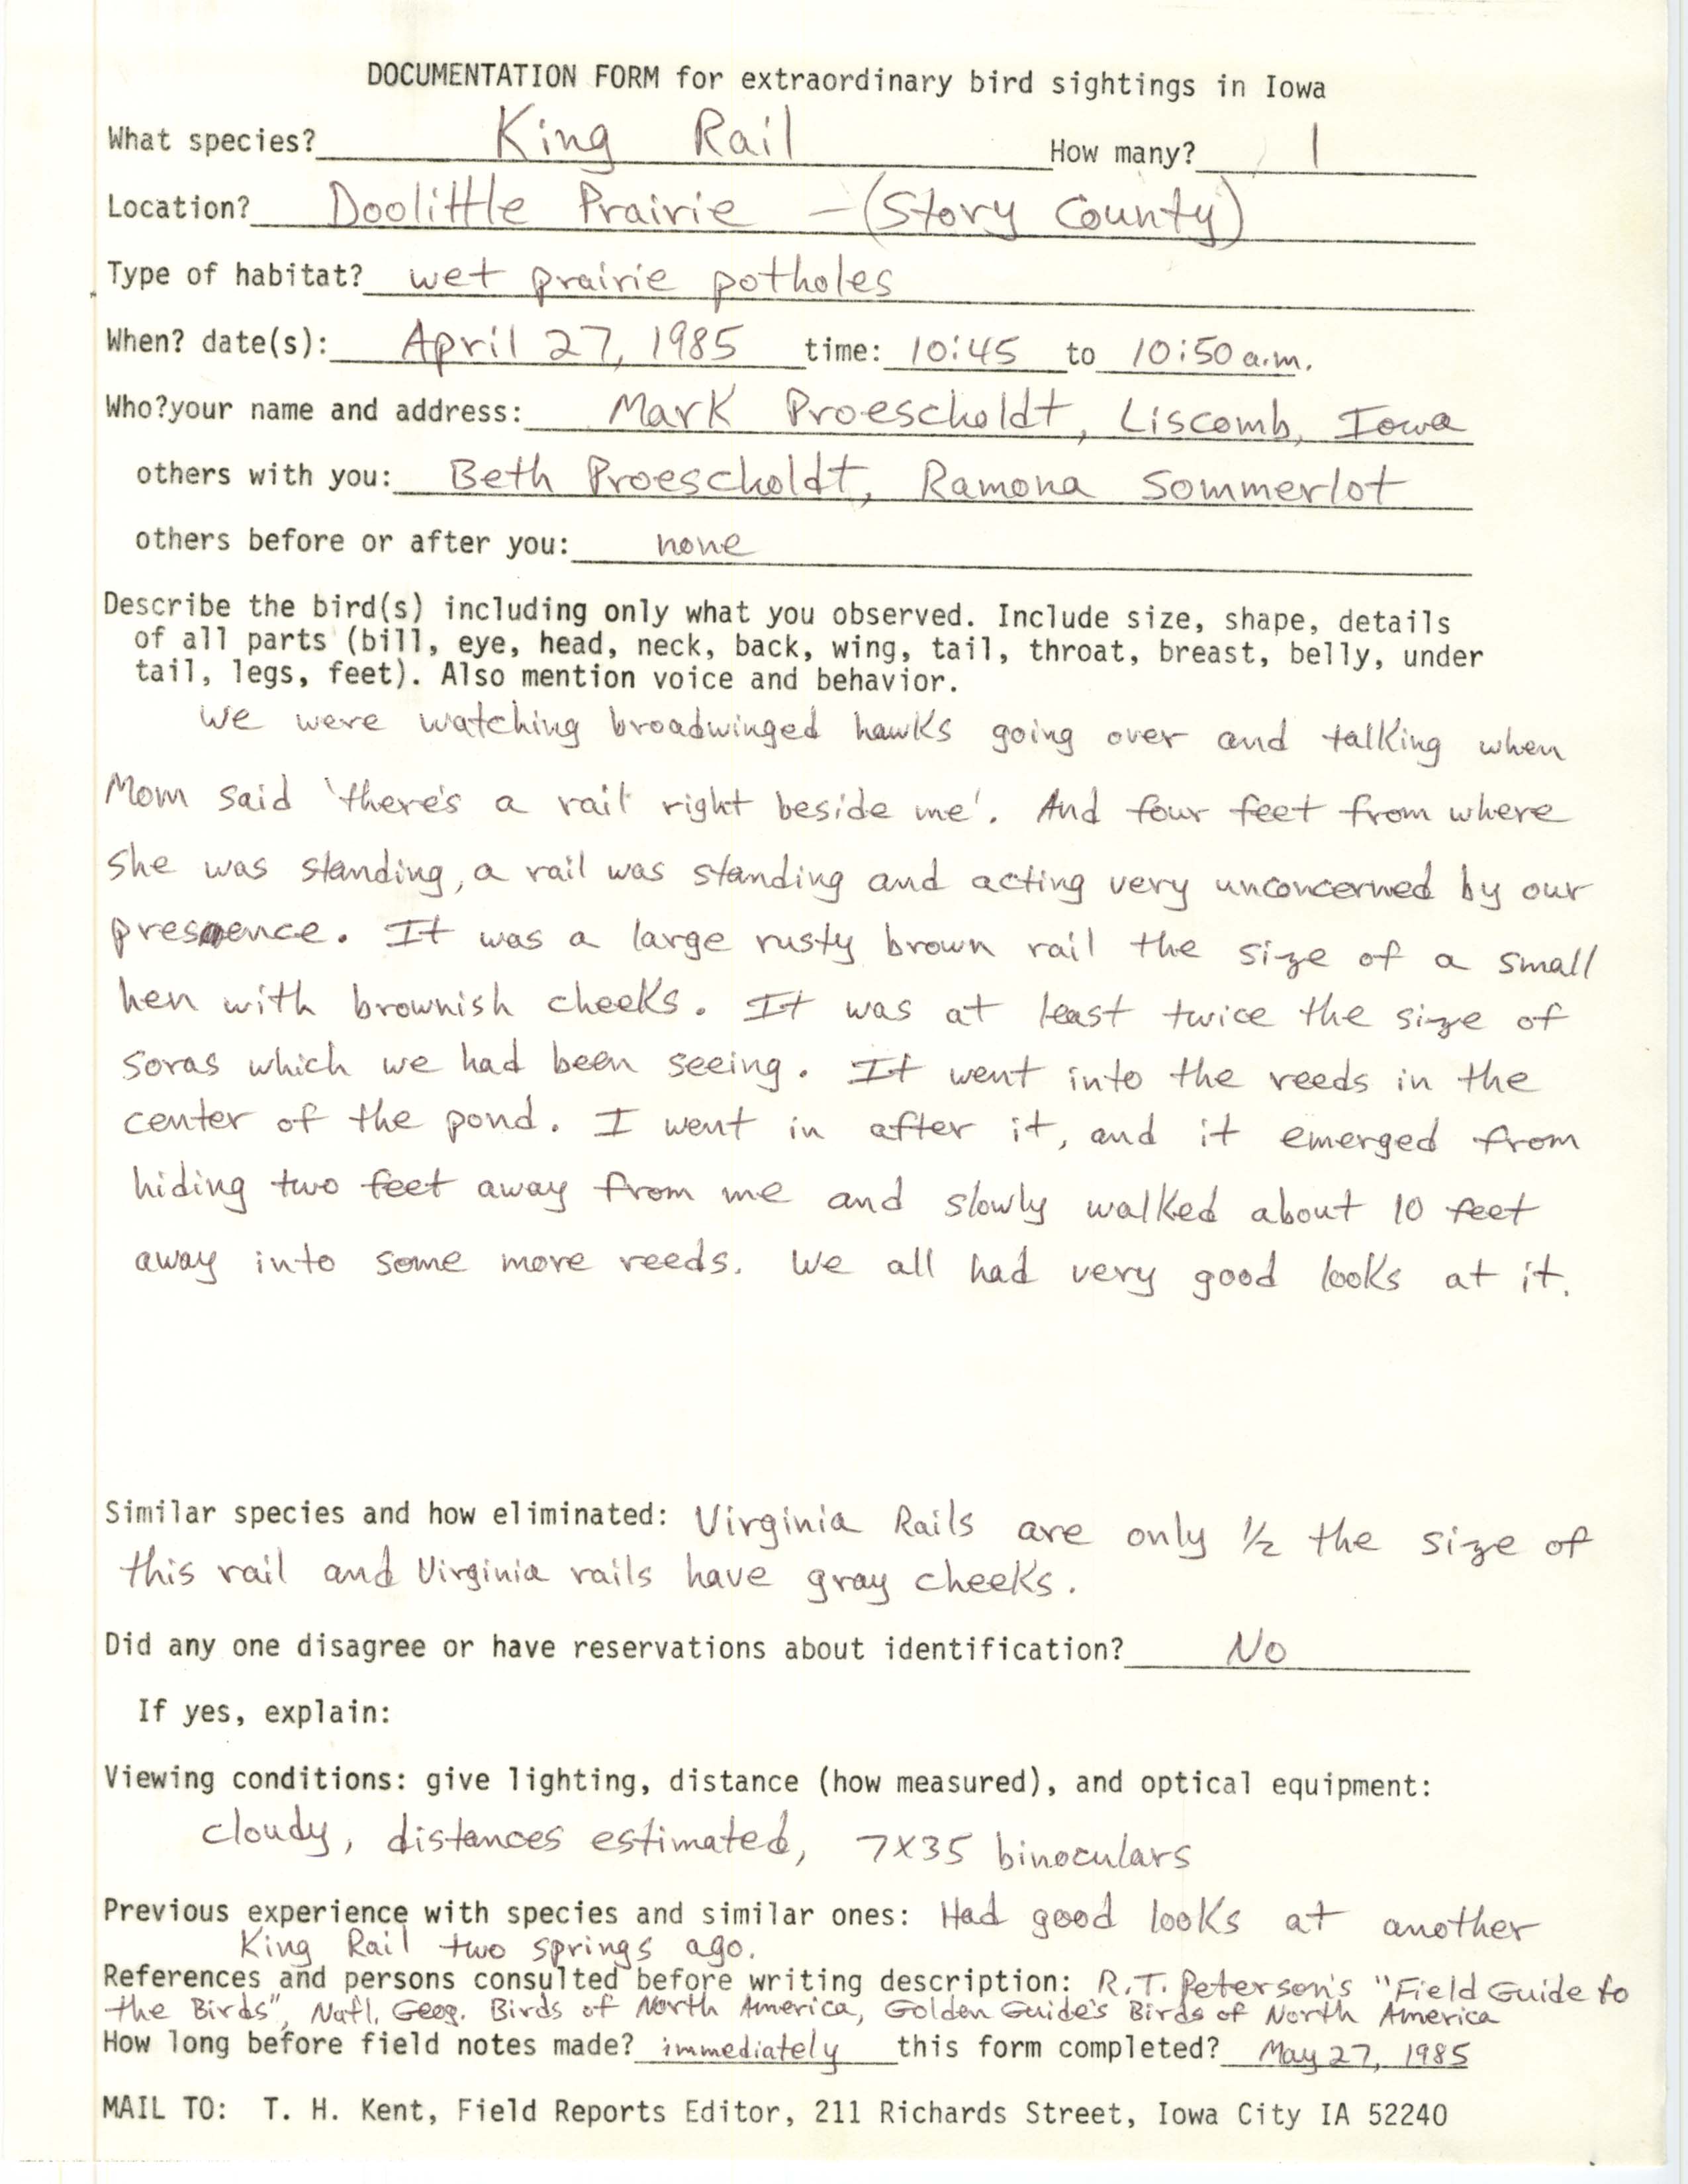 Rare bird documentation form for King Rail at Doolittle Prairie, 1985